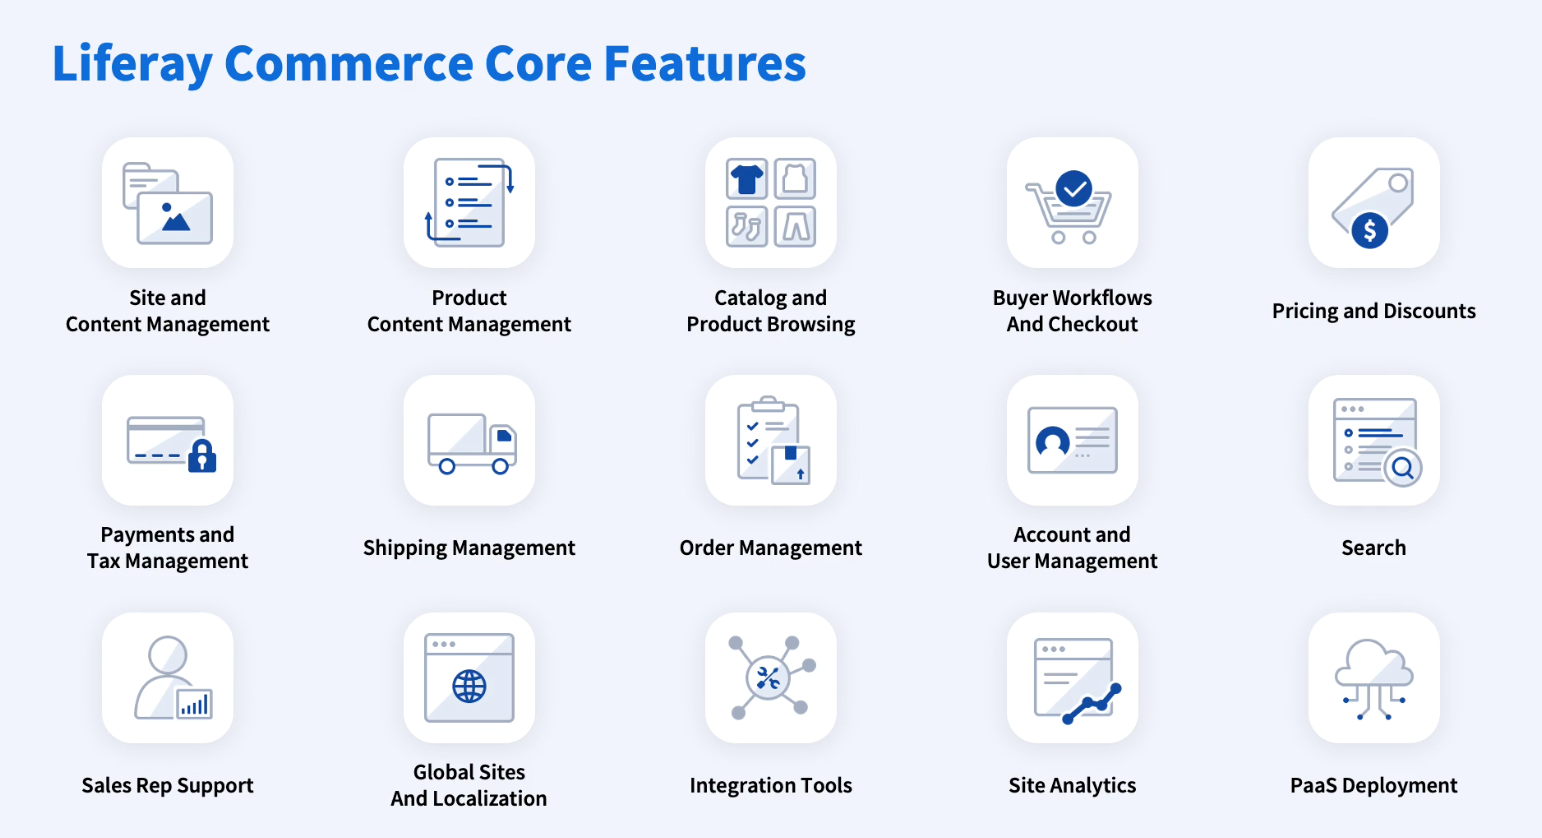 Liferay commerce core features